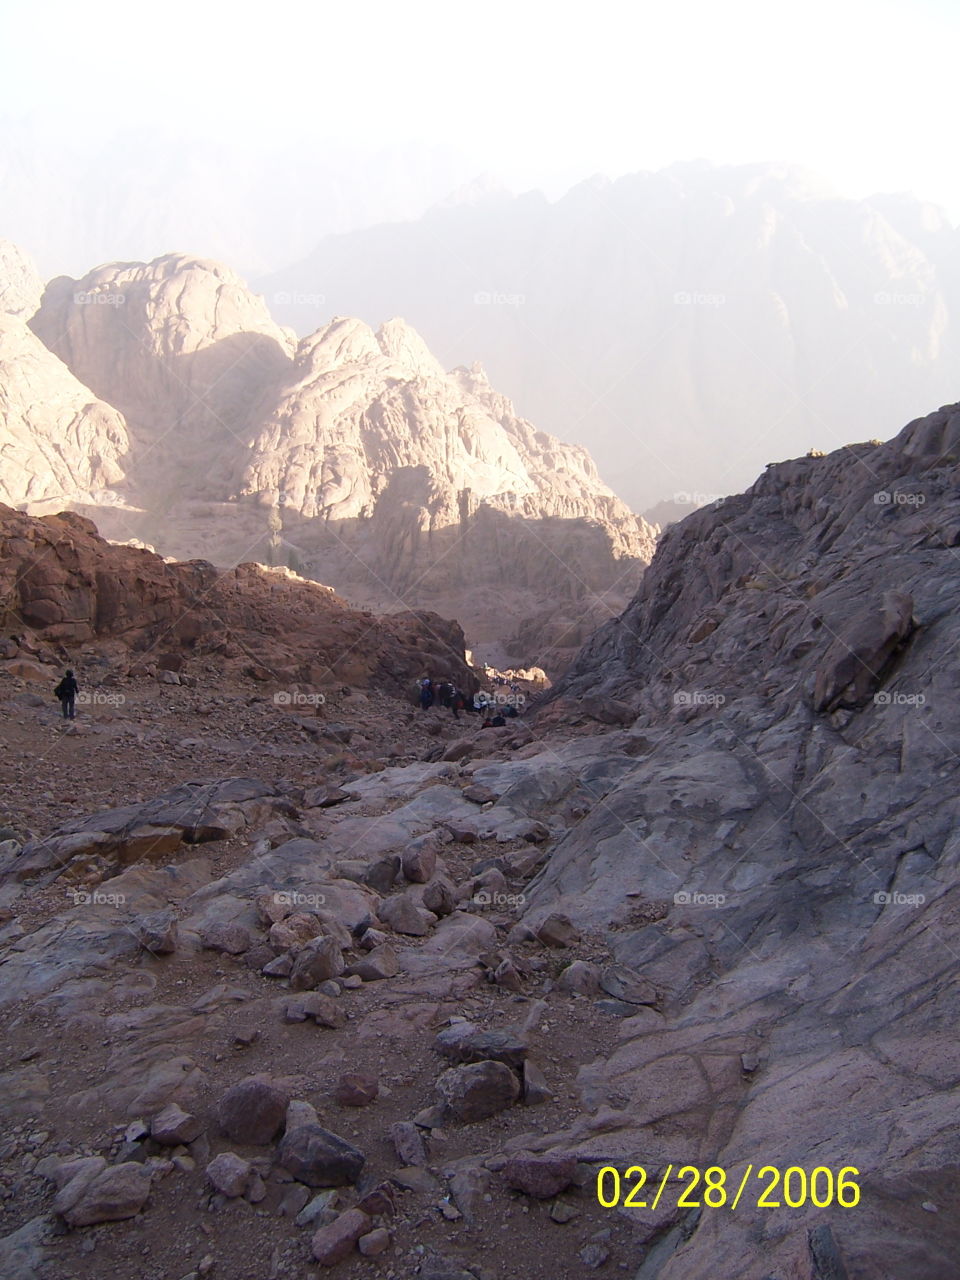 Mount Sinai after sunrise